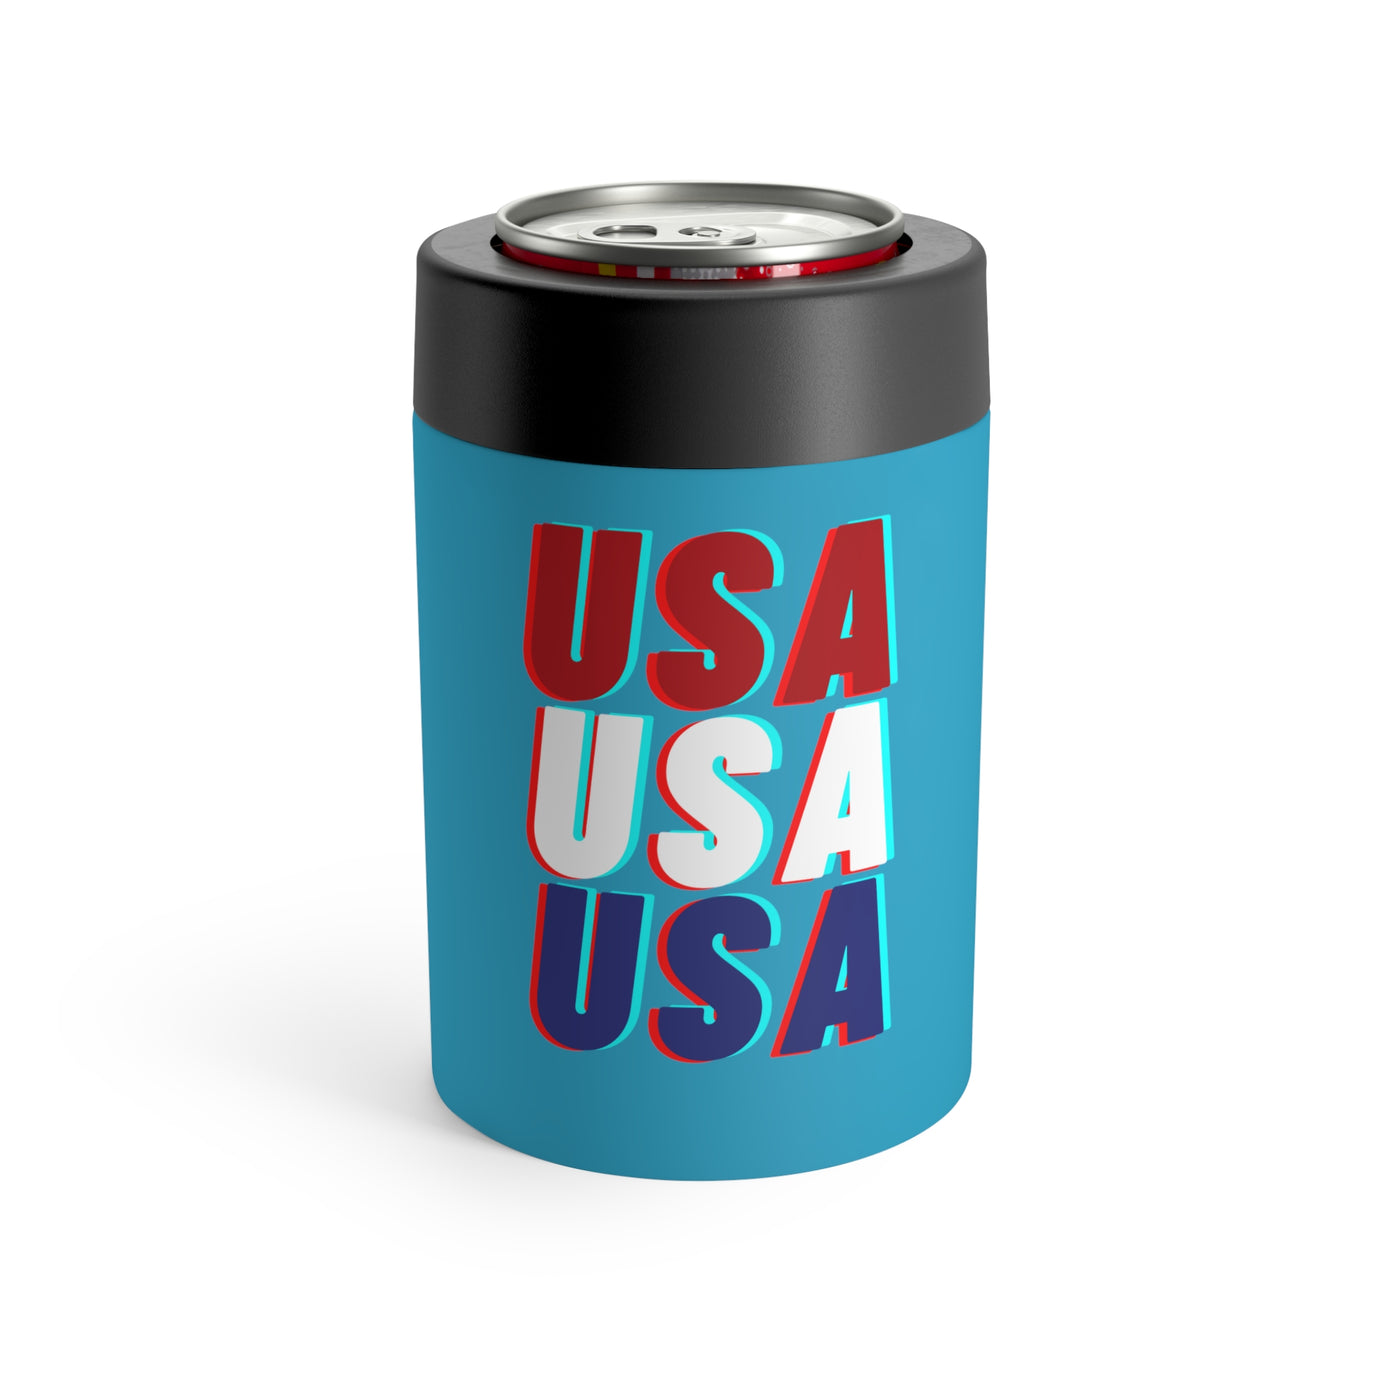 USA USA USA Stainless Steel Can Holder